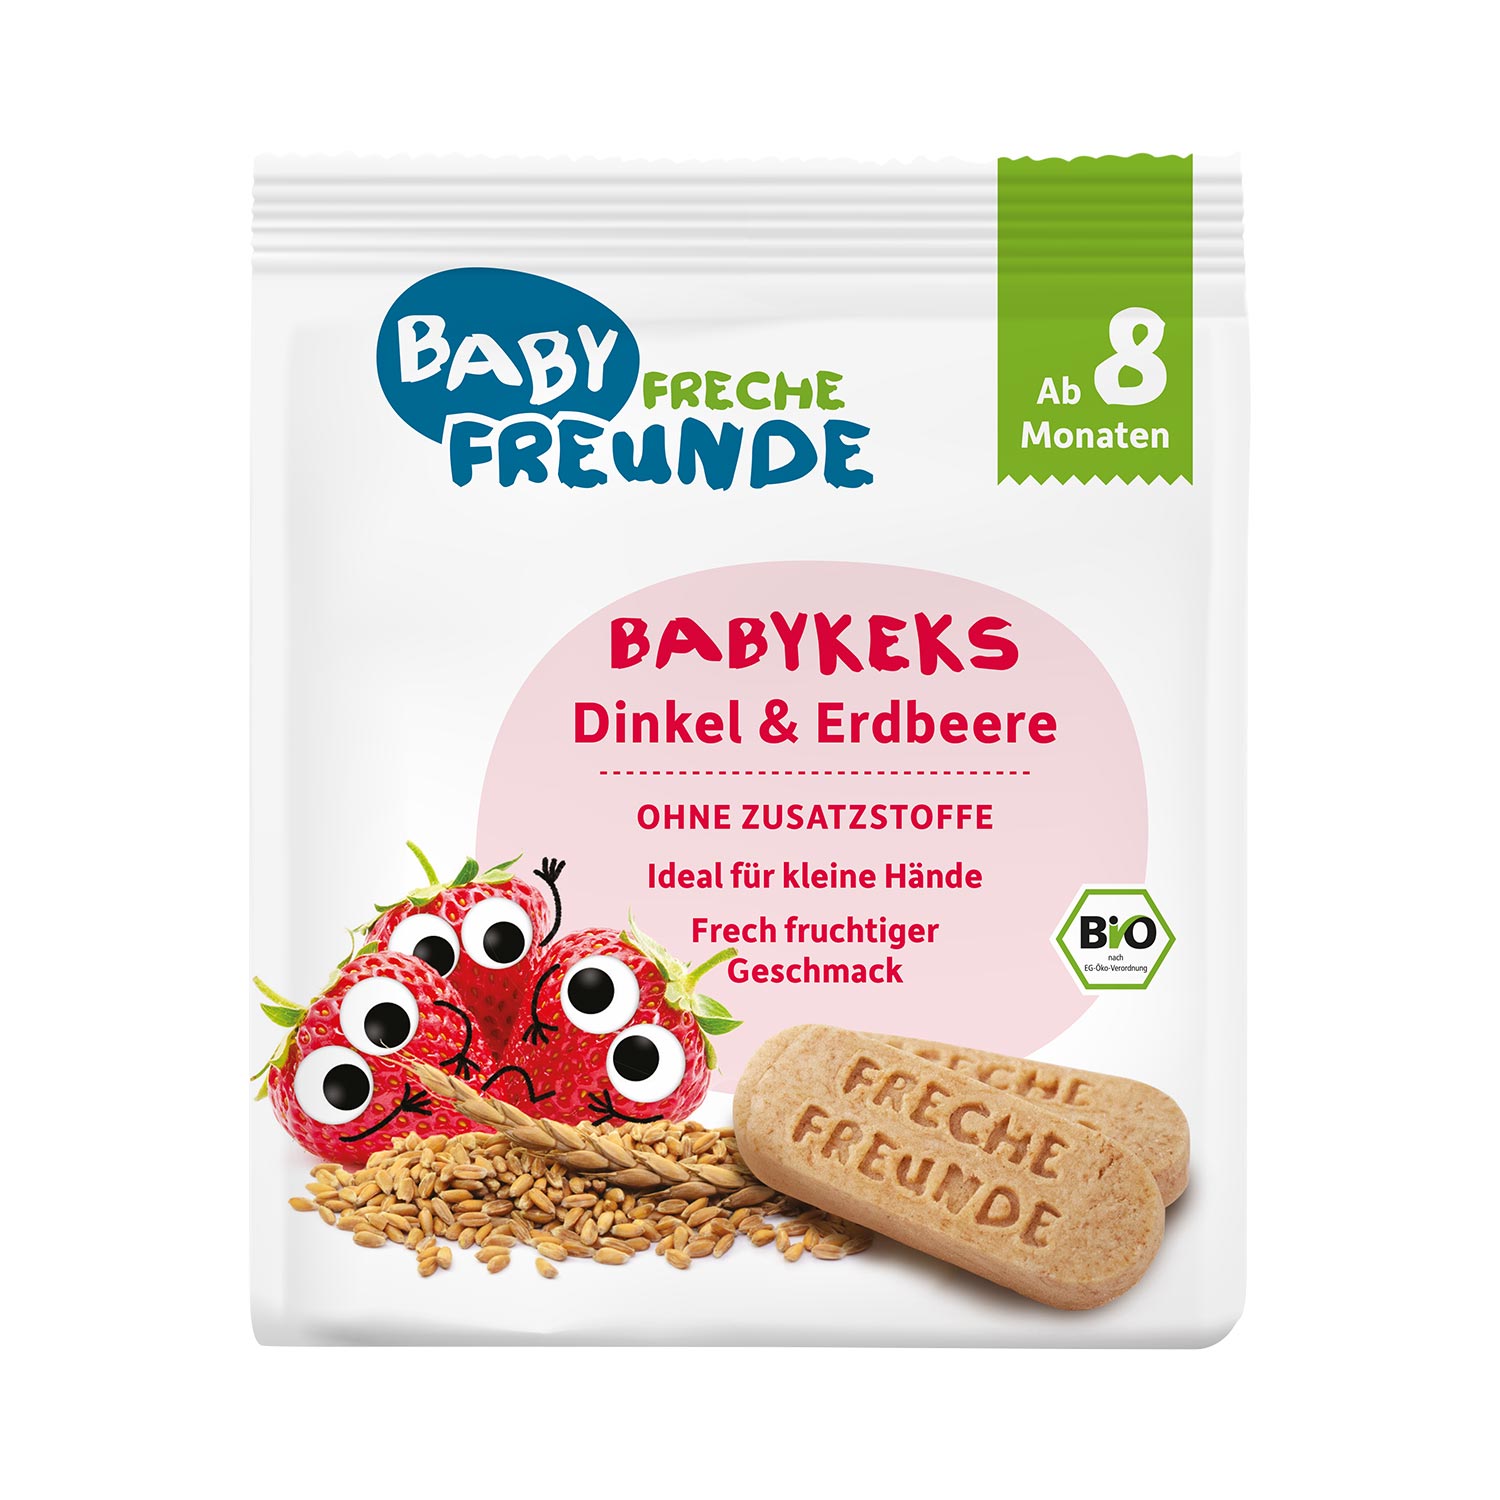 https://frechefreunde.ch/wp-content/uploads/2022/09/baby-freche-freunde-babykeks-dinkel-erdbeere-7.jpg